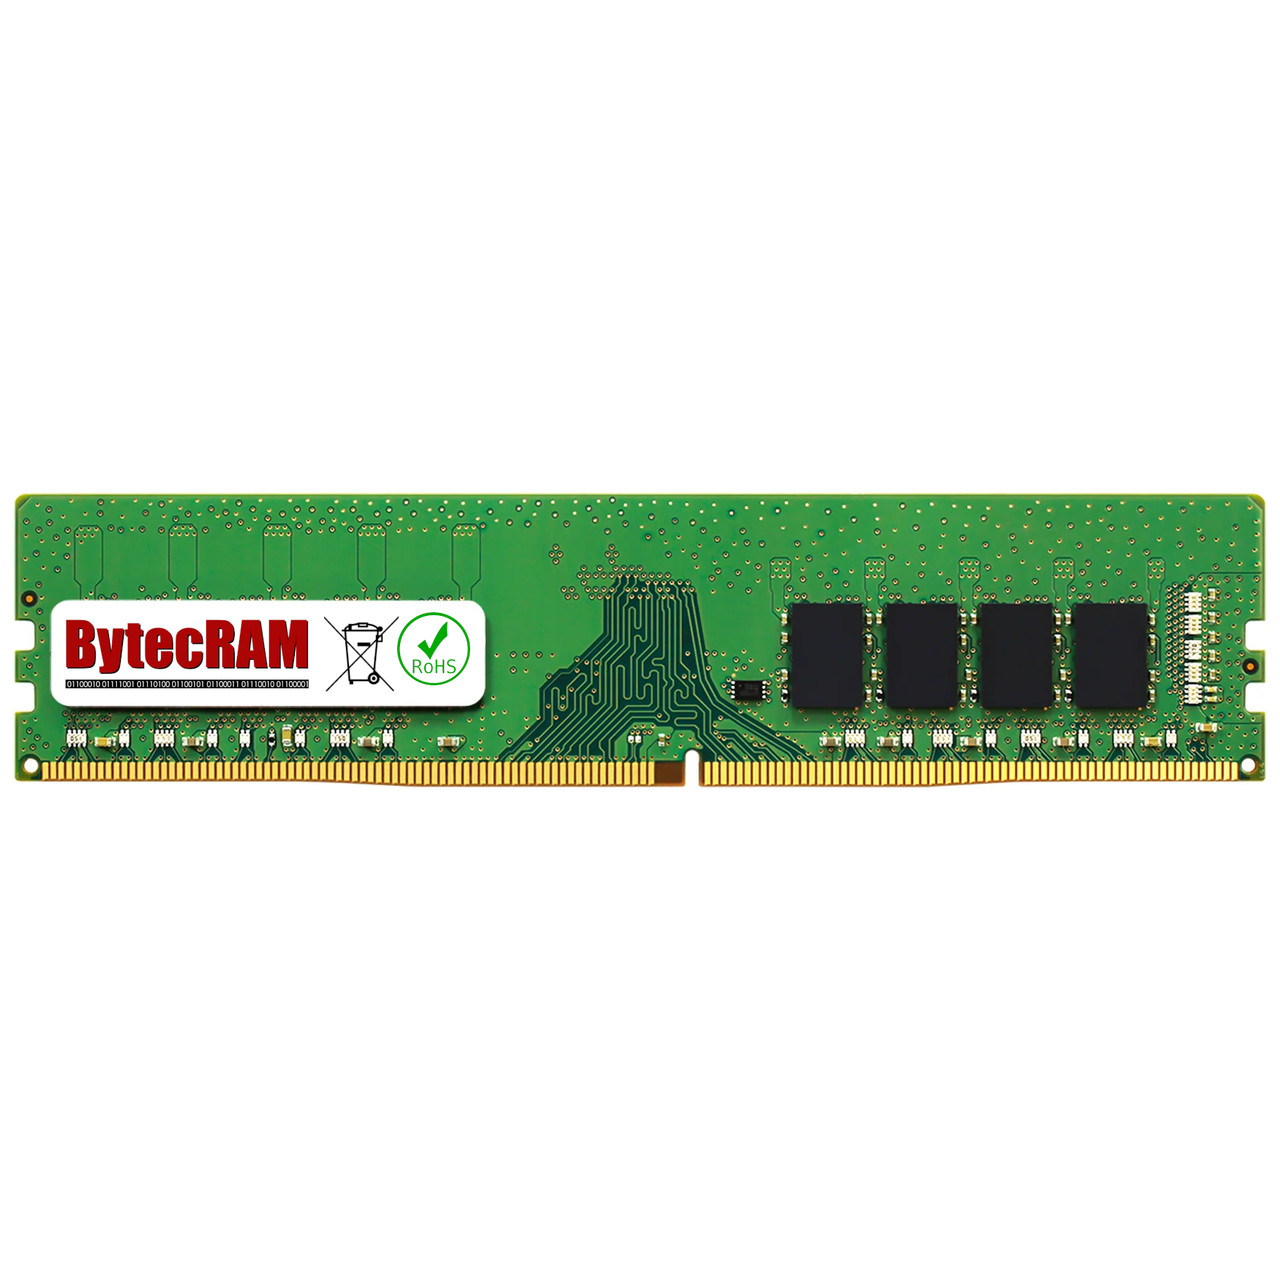 eBay*8GB Dell Inspiron 3471 DDR4 2400MHz UDIMM Memory RAM Upgrade